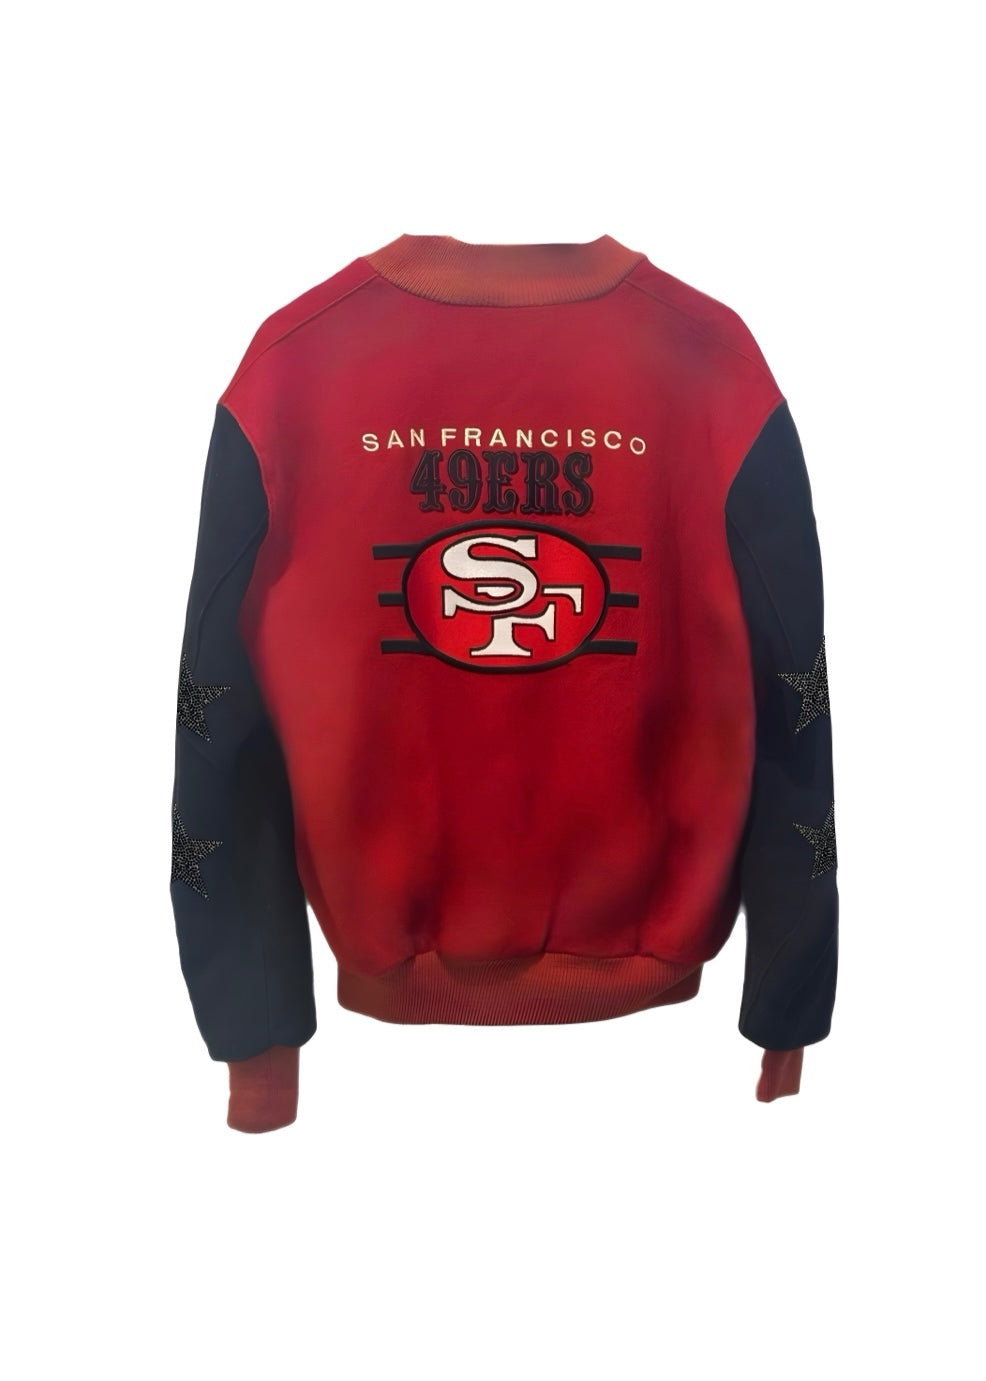 San Francisco 49ers, Football “Rare Find” One of a KIND Vintage  Bomber Jacket with Black Crystal Star Design